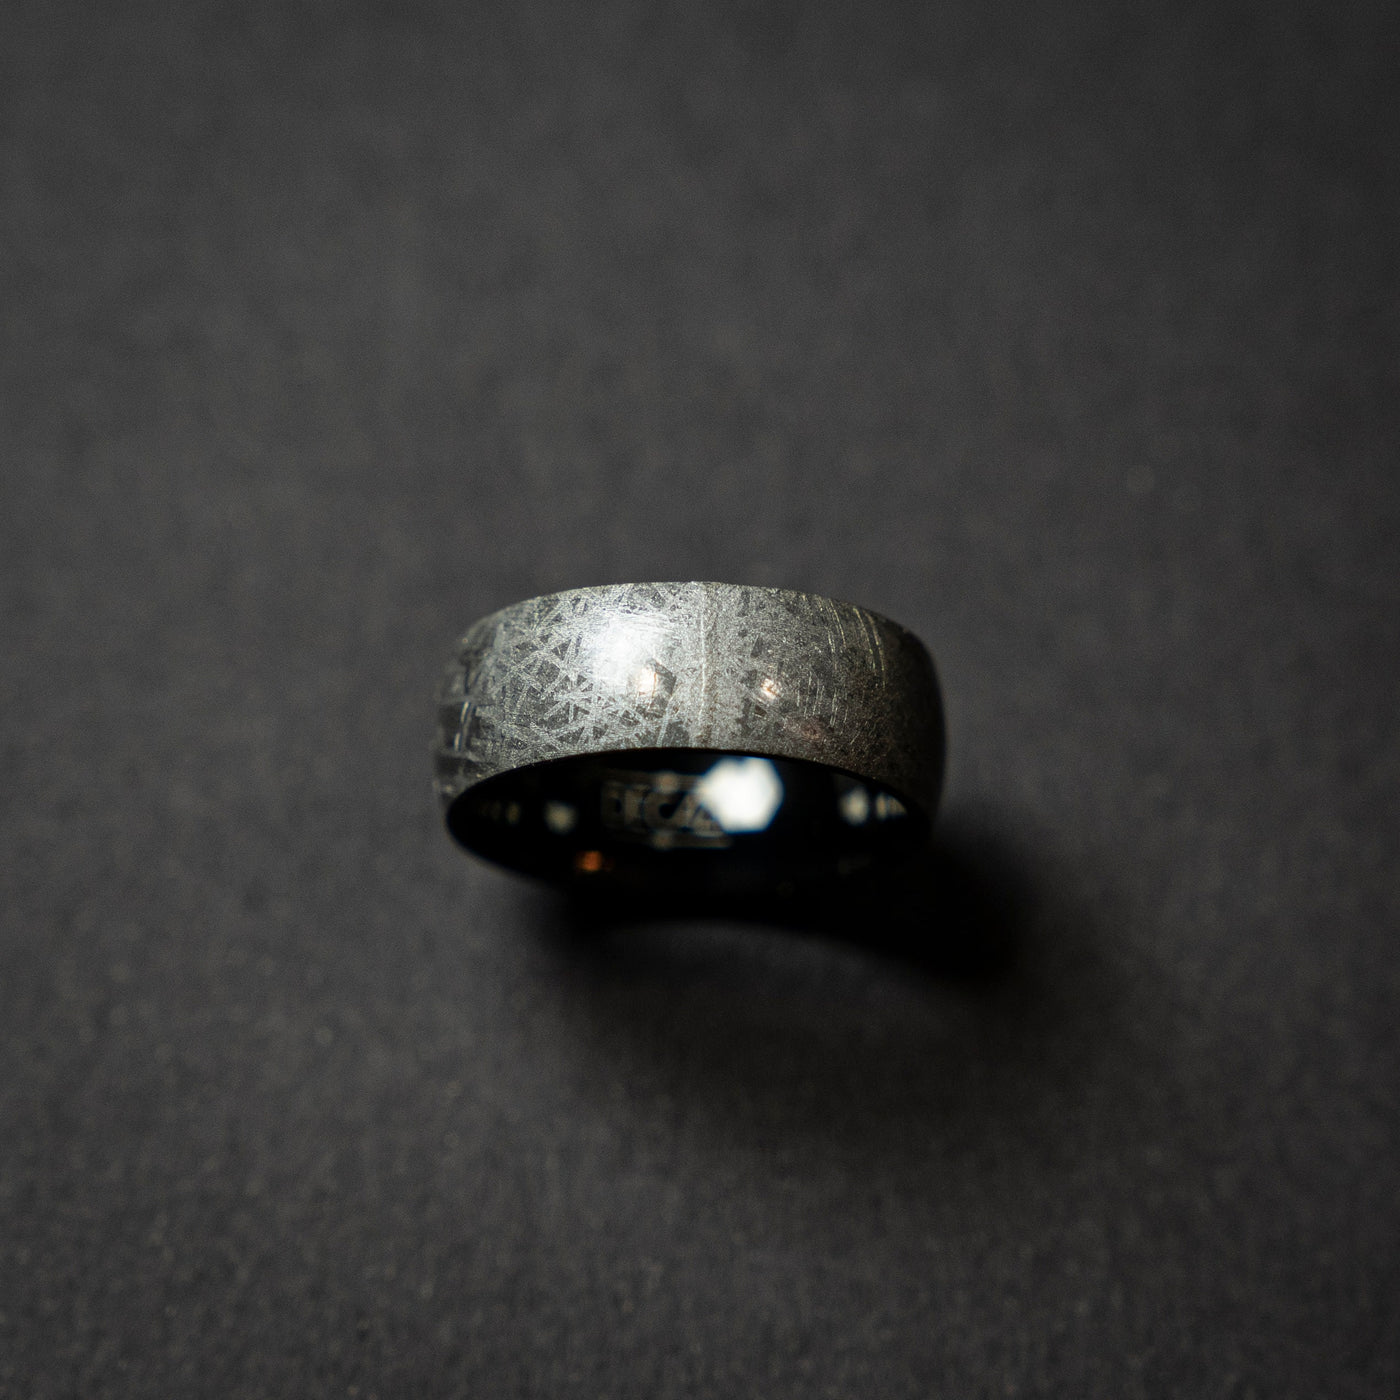 genuine meteorite mens wedding band, meteorite ring, meteorite wedding ring, man wedding band, ring man, Gift for him, Black tungsten ring.